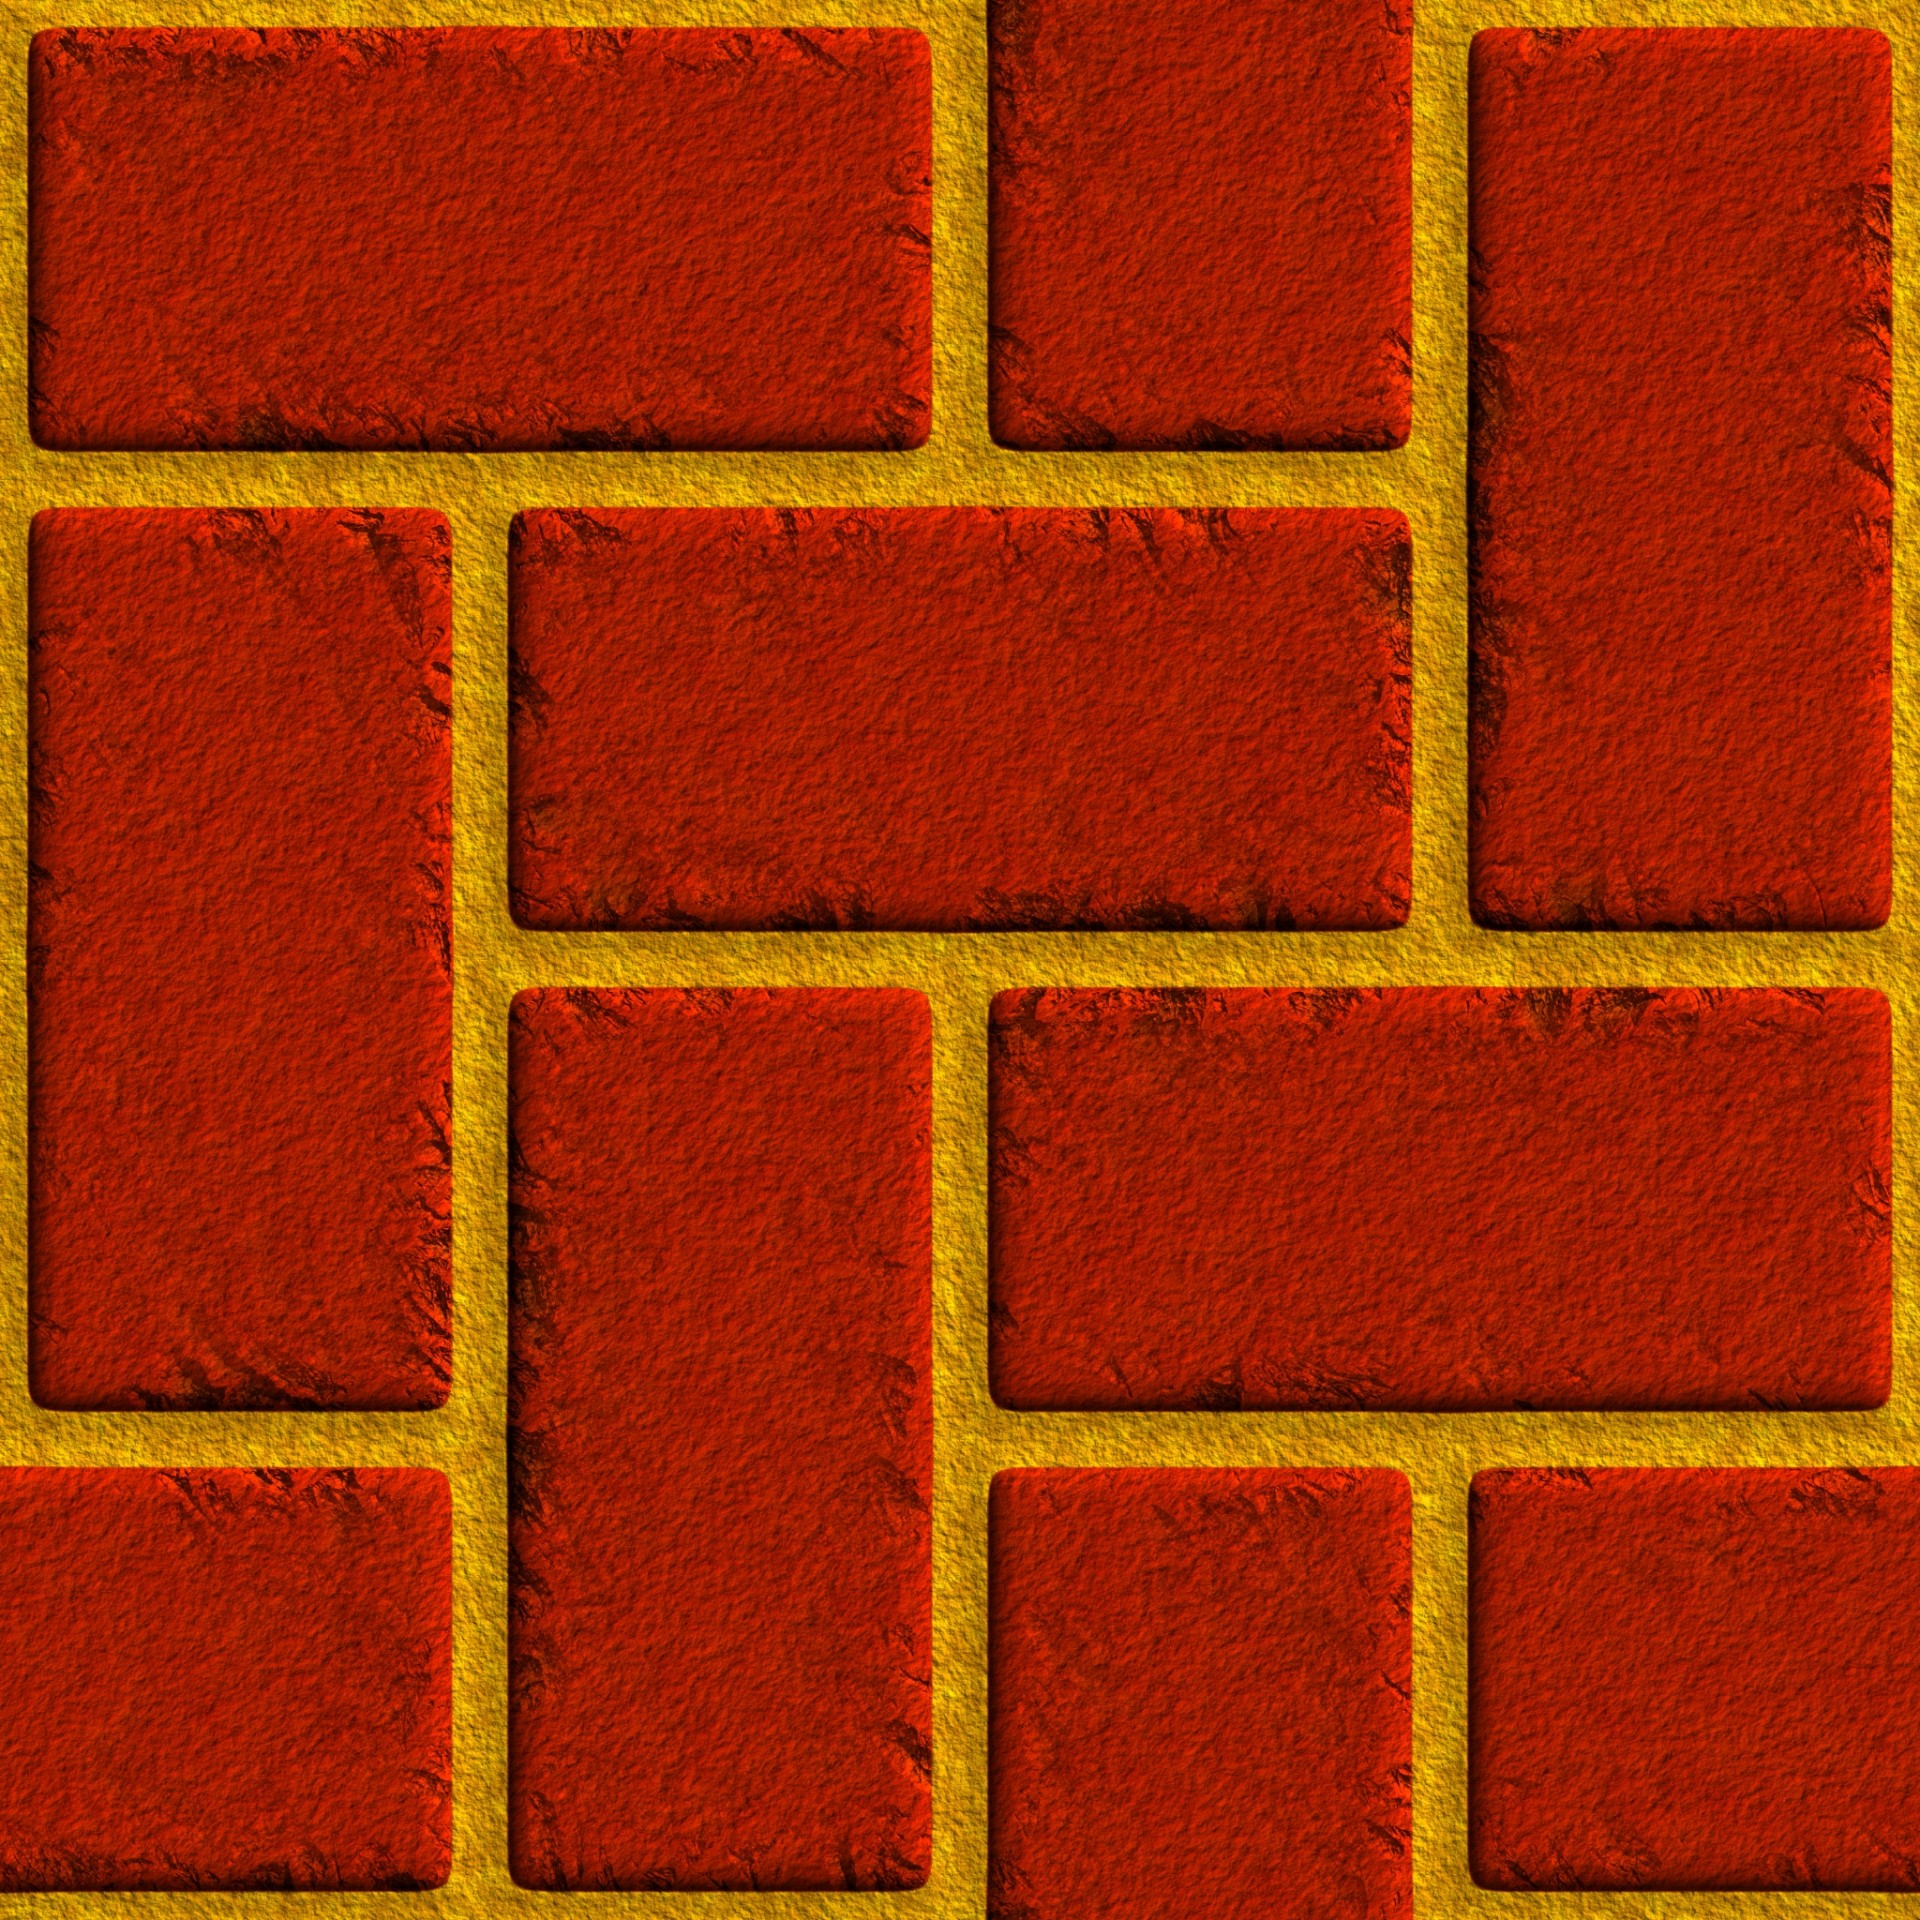 Chipped Bricks